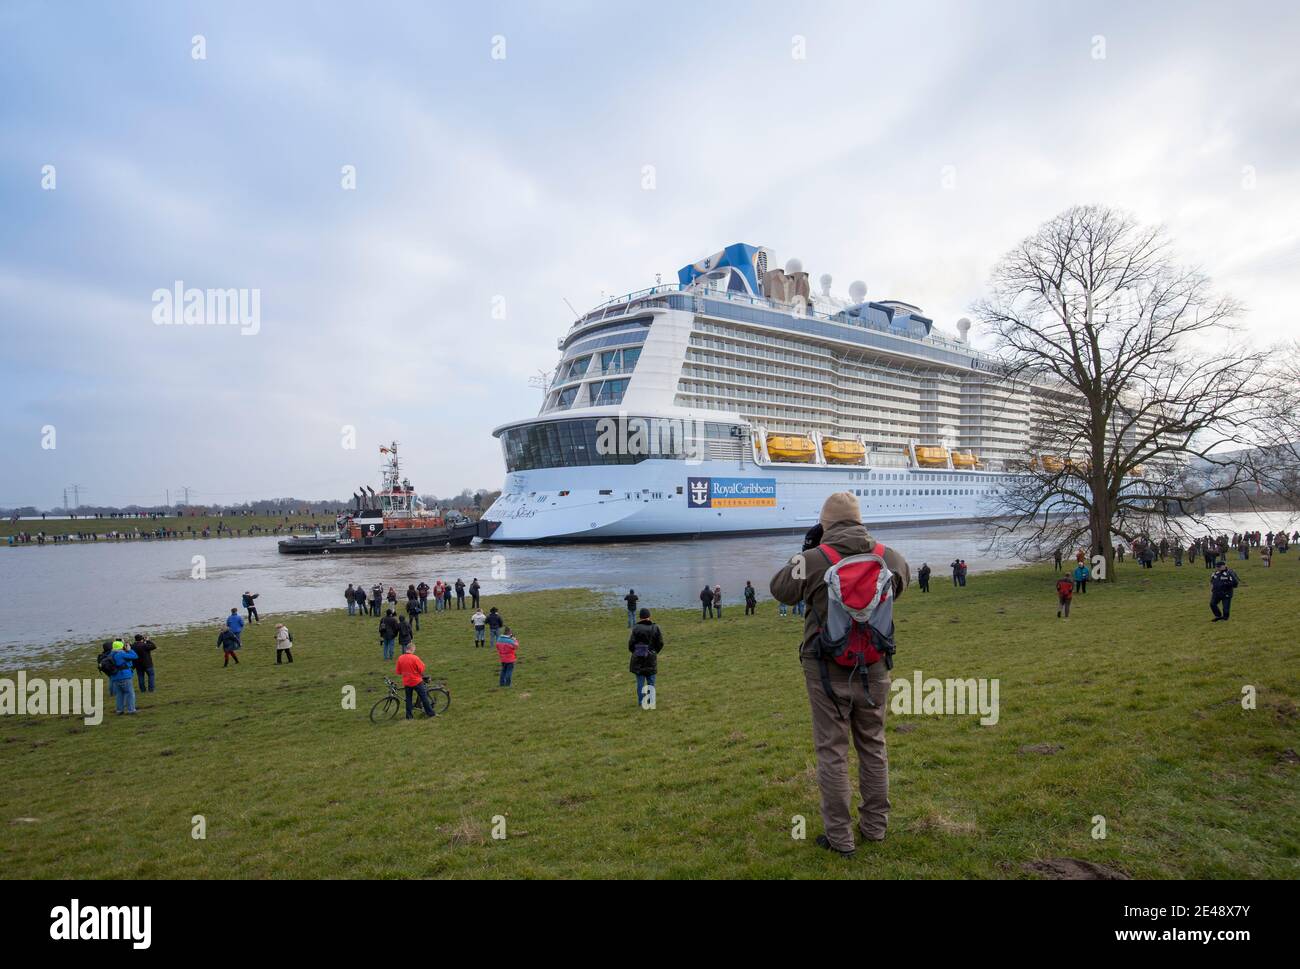 Undocking Ovations of the Seas, Meyer Werft, Papenburg Stock Photo